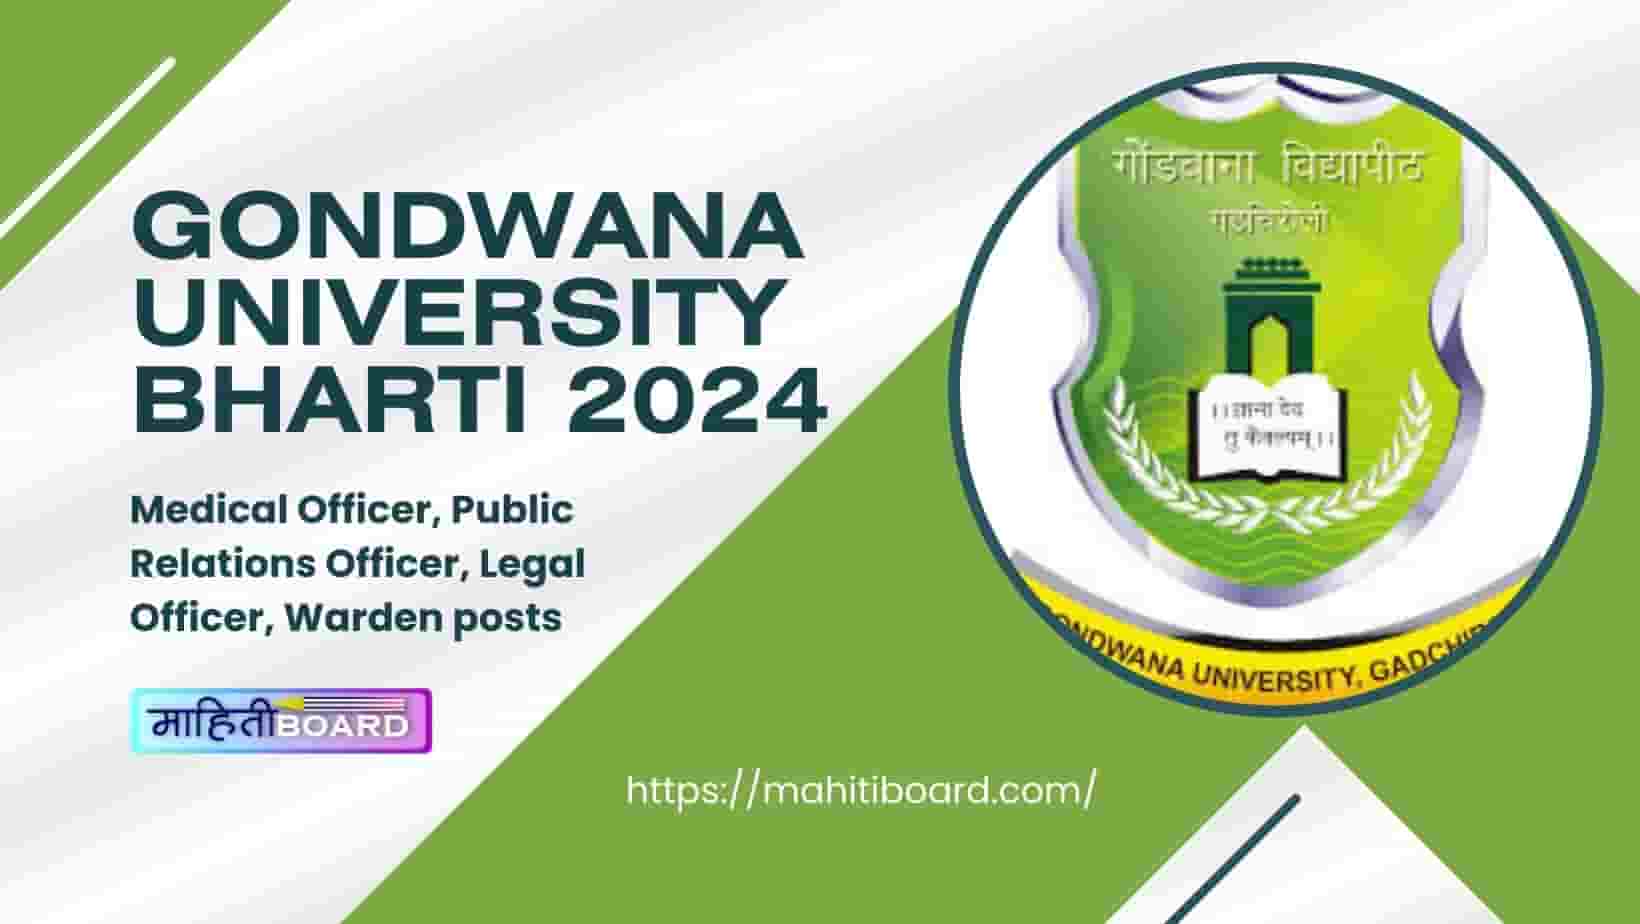 Gondwana University Bharti 2024